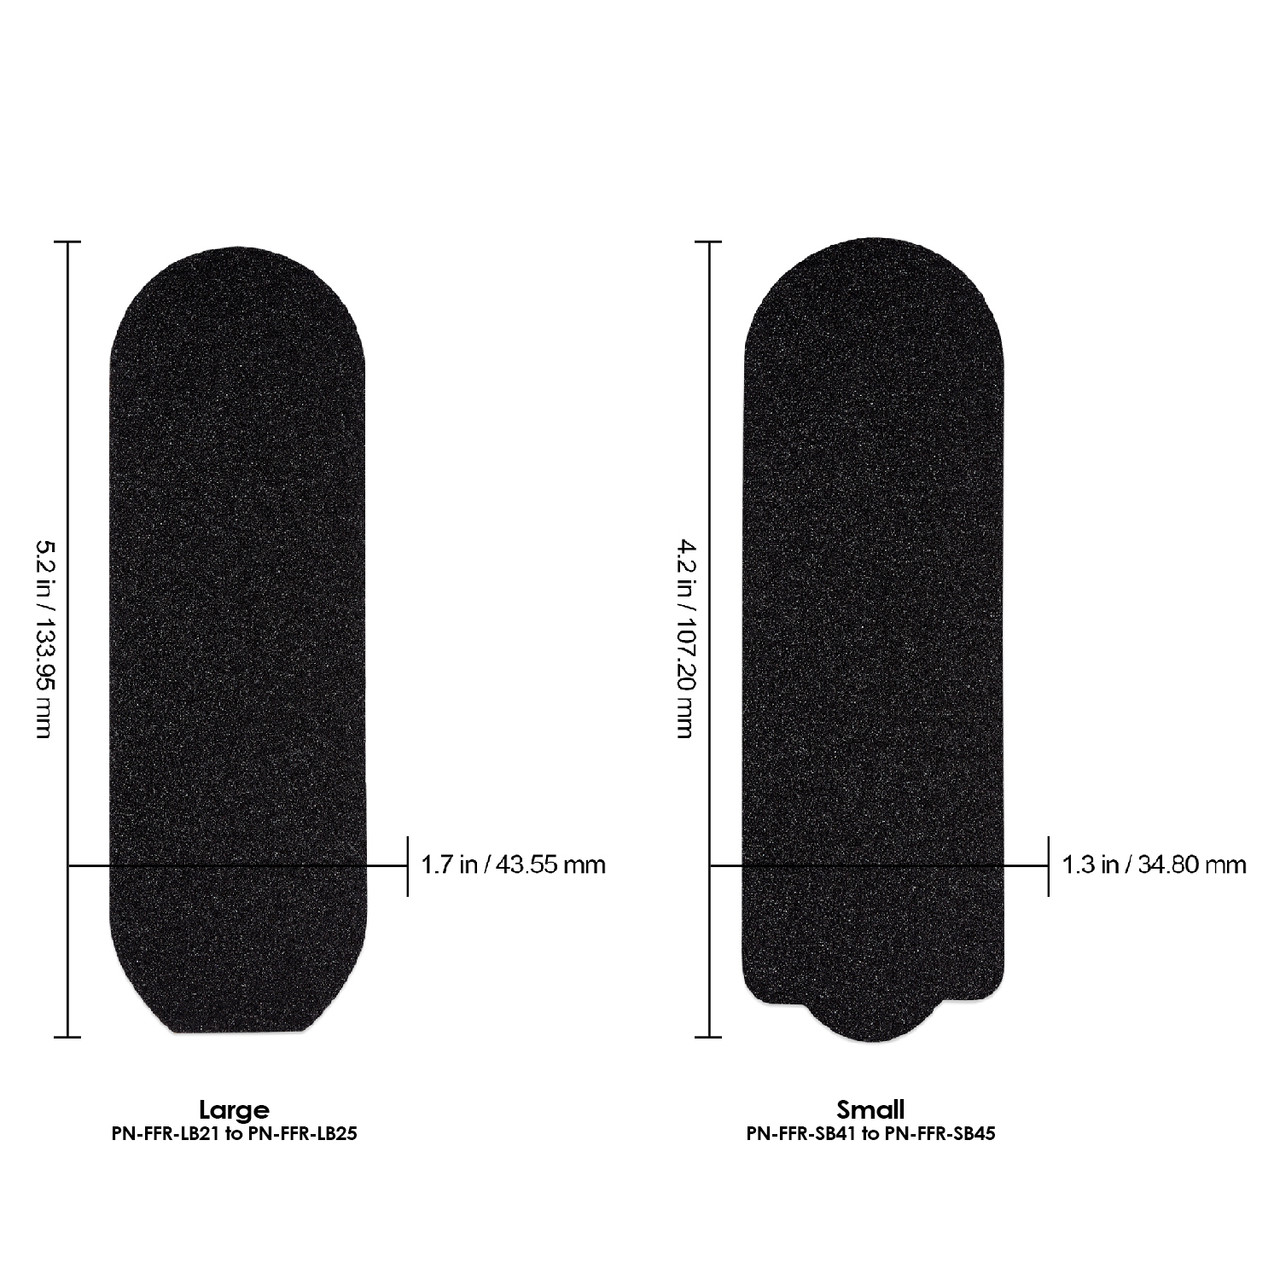 Small Pedicure Foot File Refill Pads - 50pcs/Box (Grits: 80, 100, 120, 150, 180)